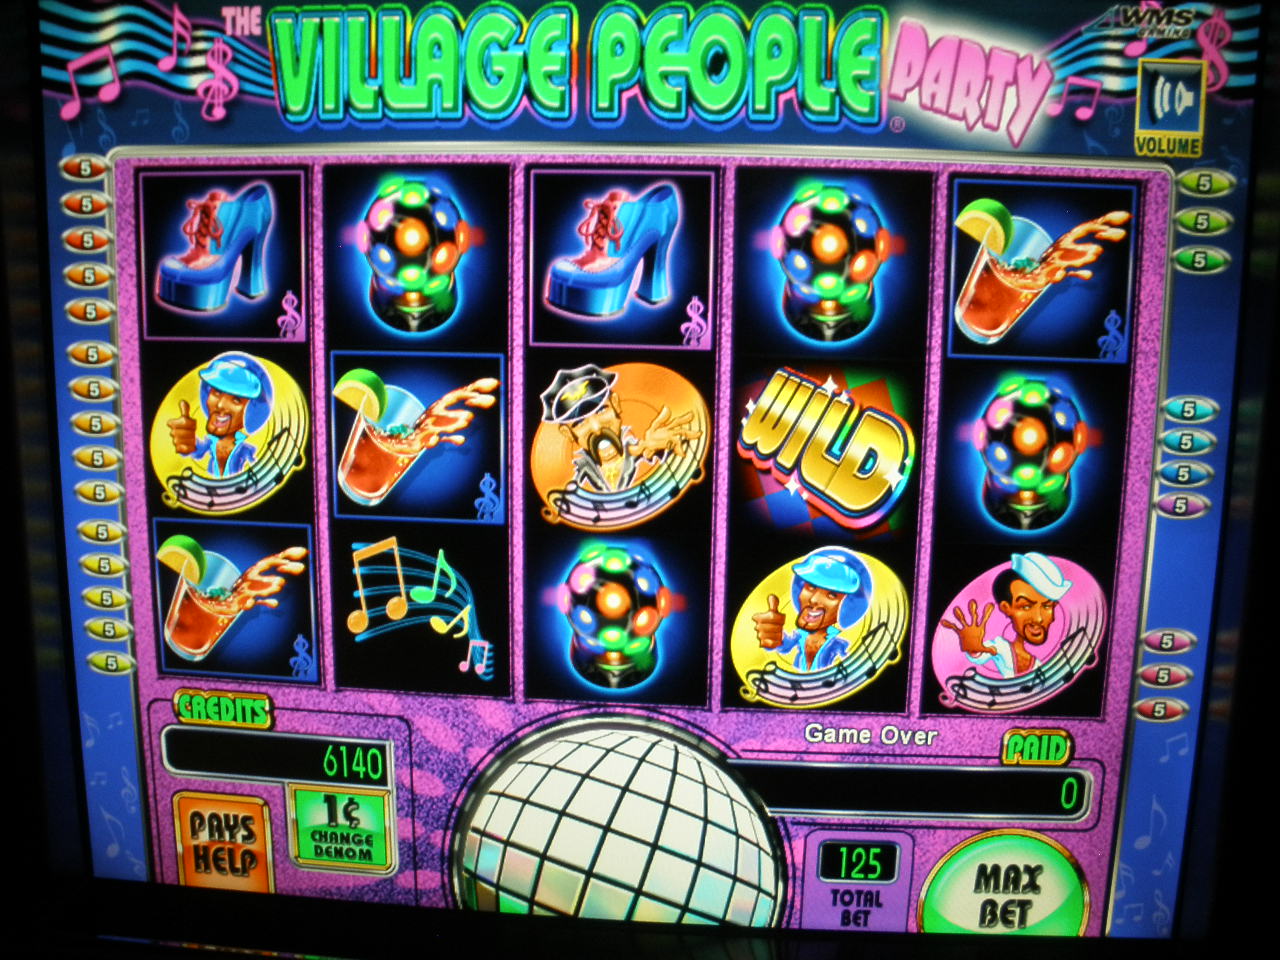 village people party slot machine online